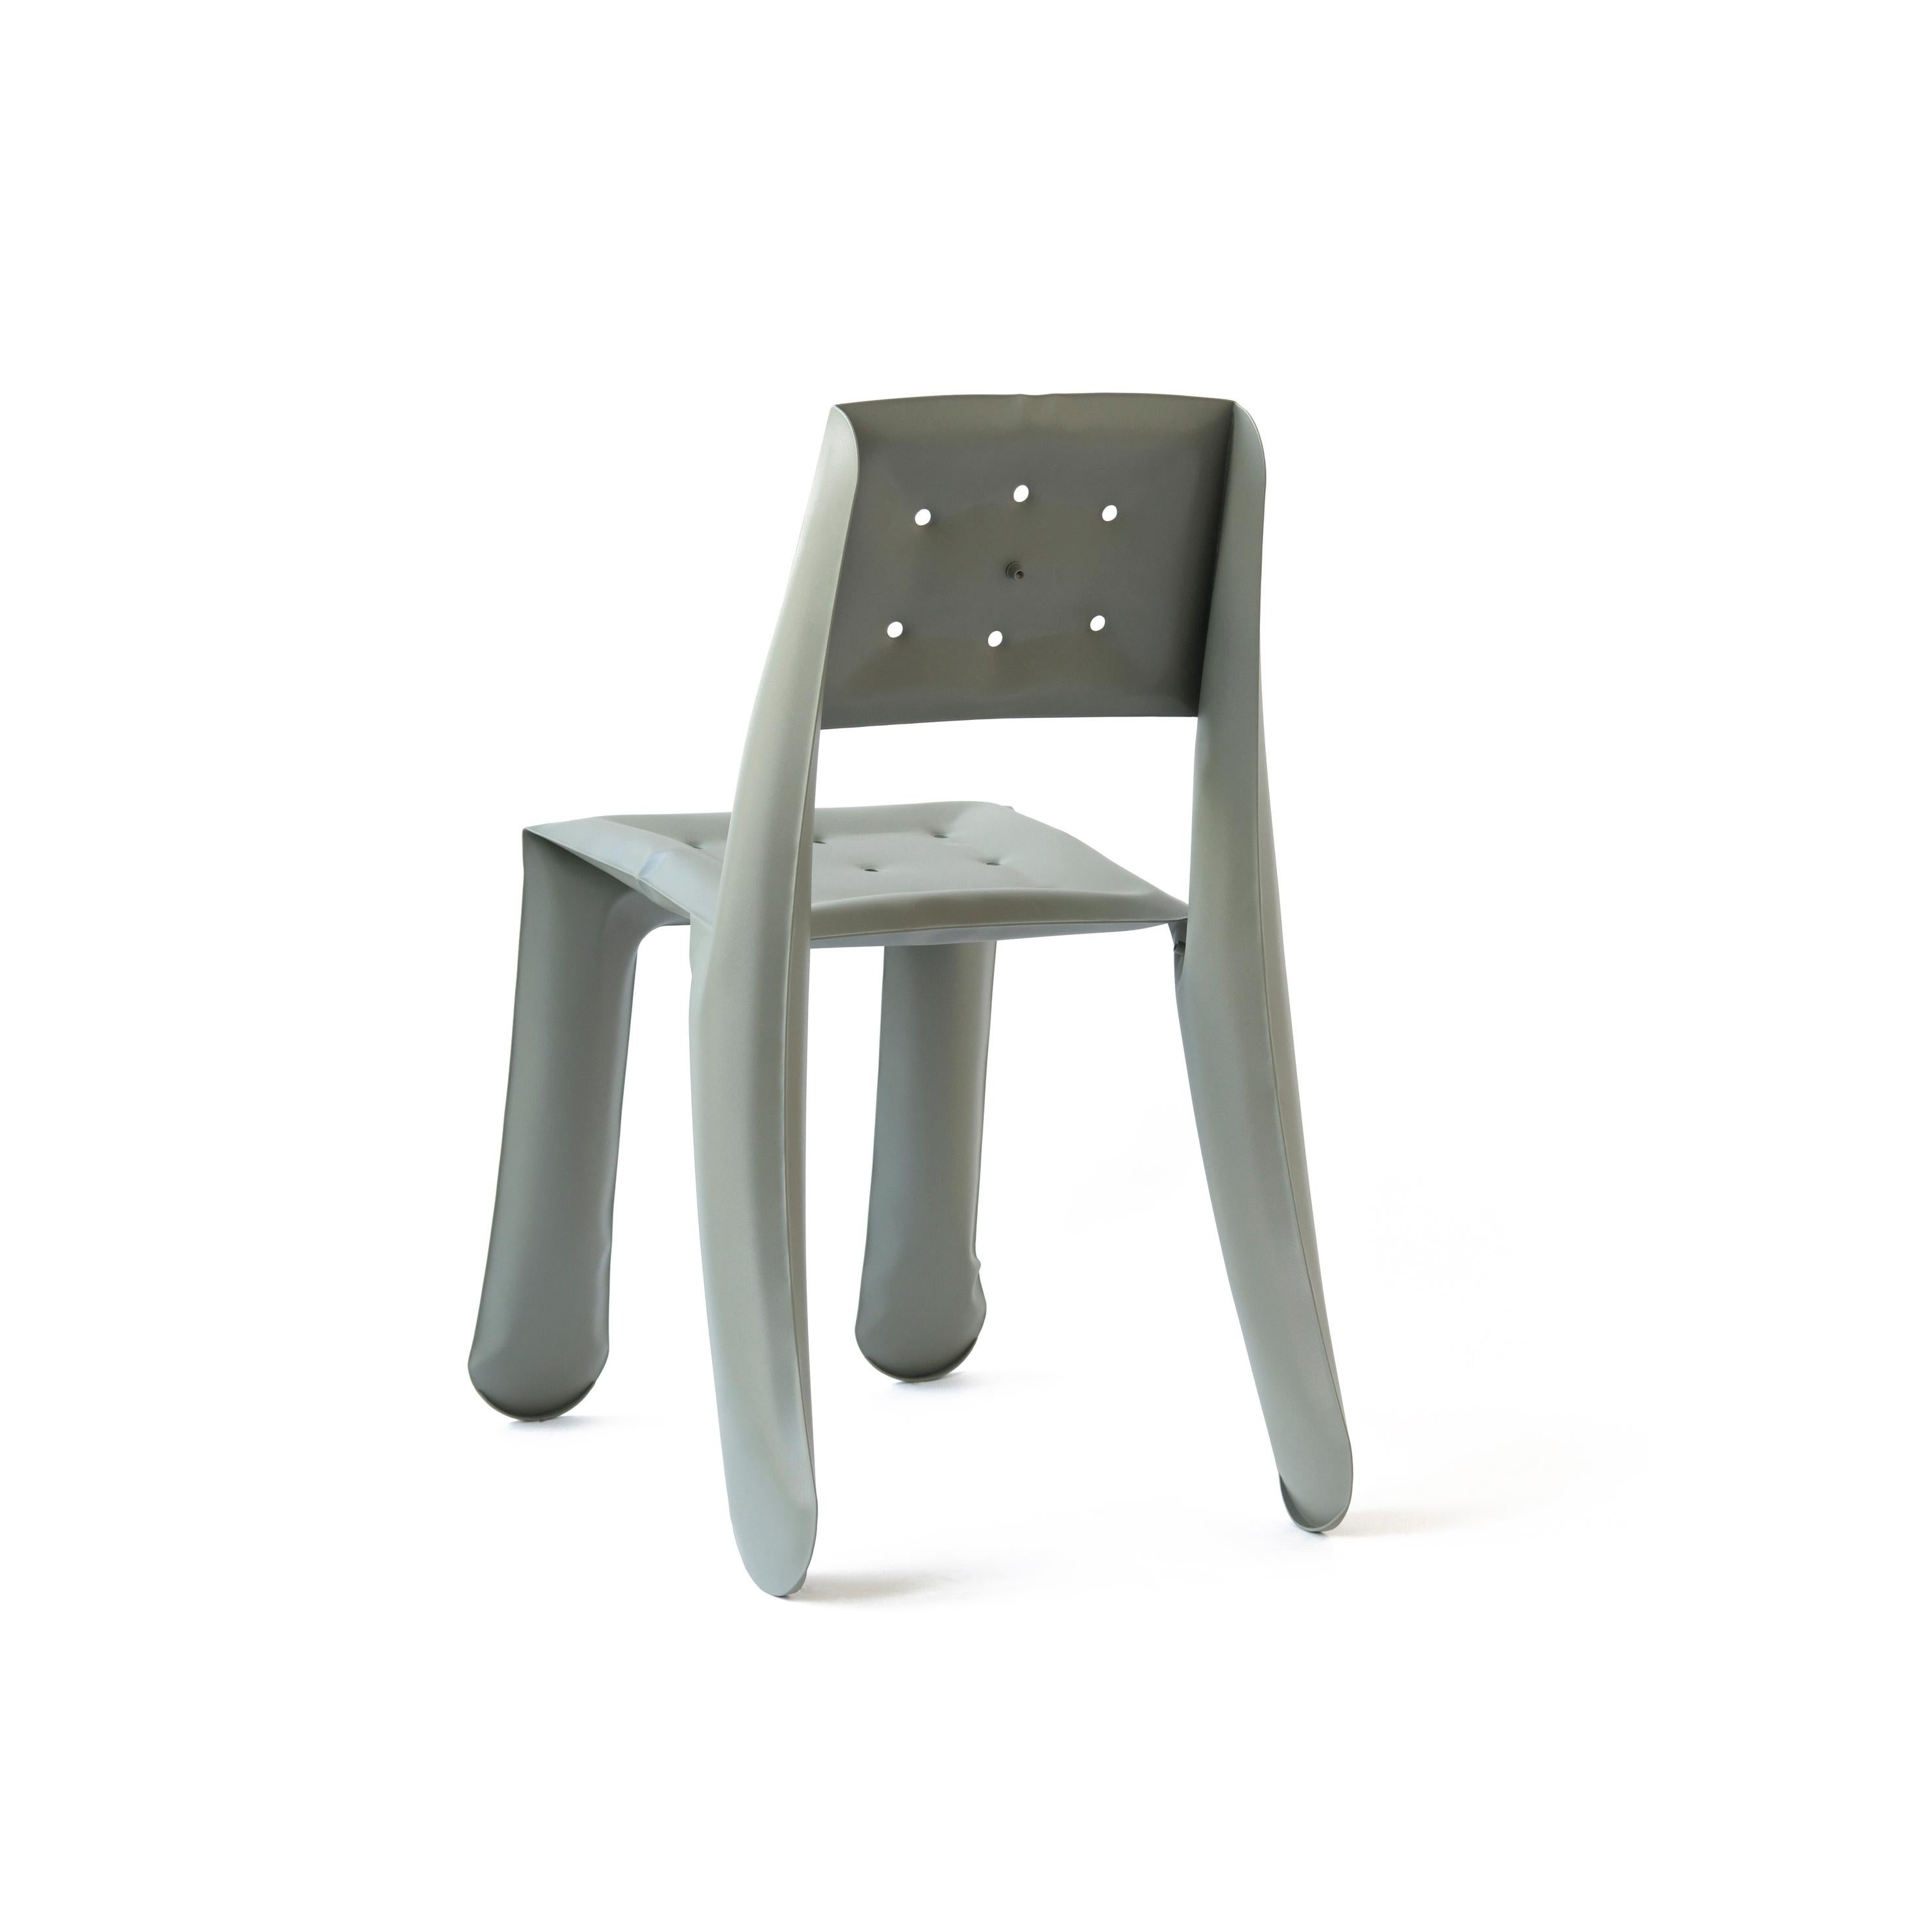 Powder-Coated Moss Grey Aluminum Chippensteel 0.5 Sculptural Chair by Zieta For Sale